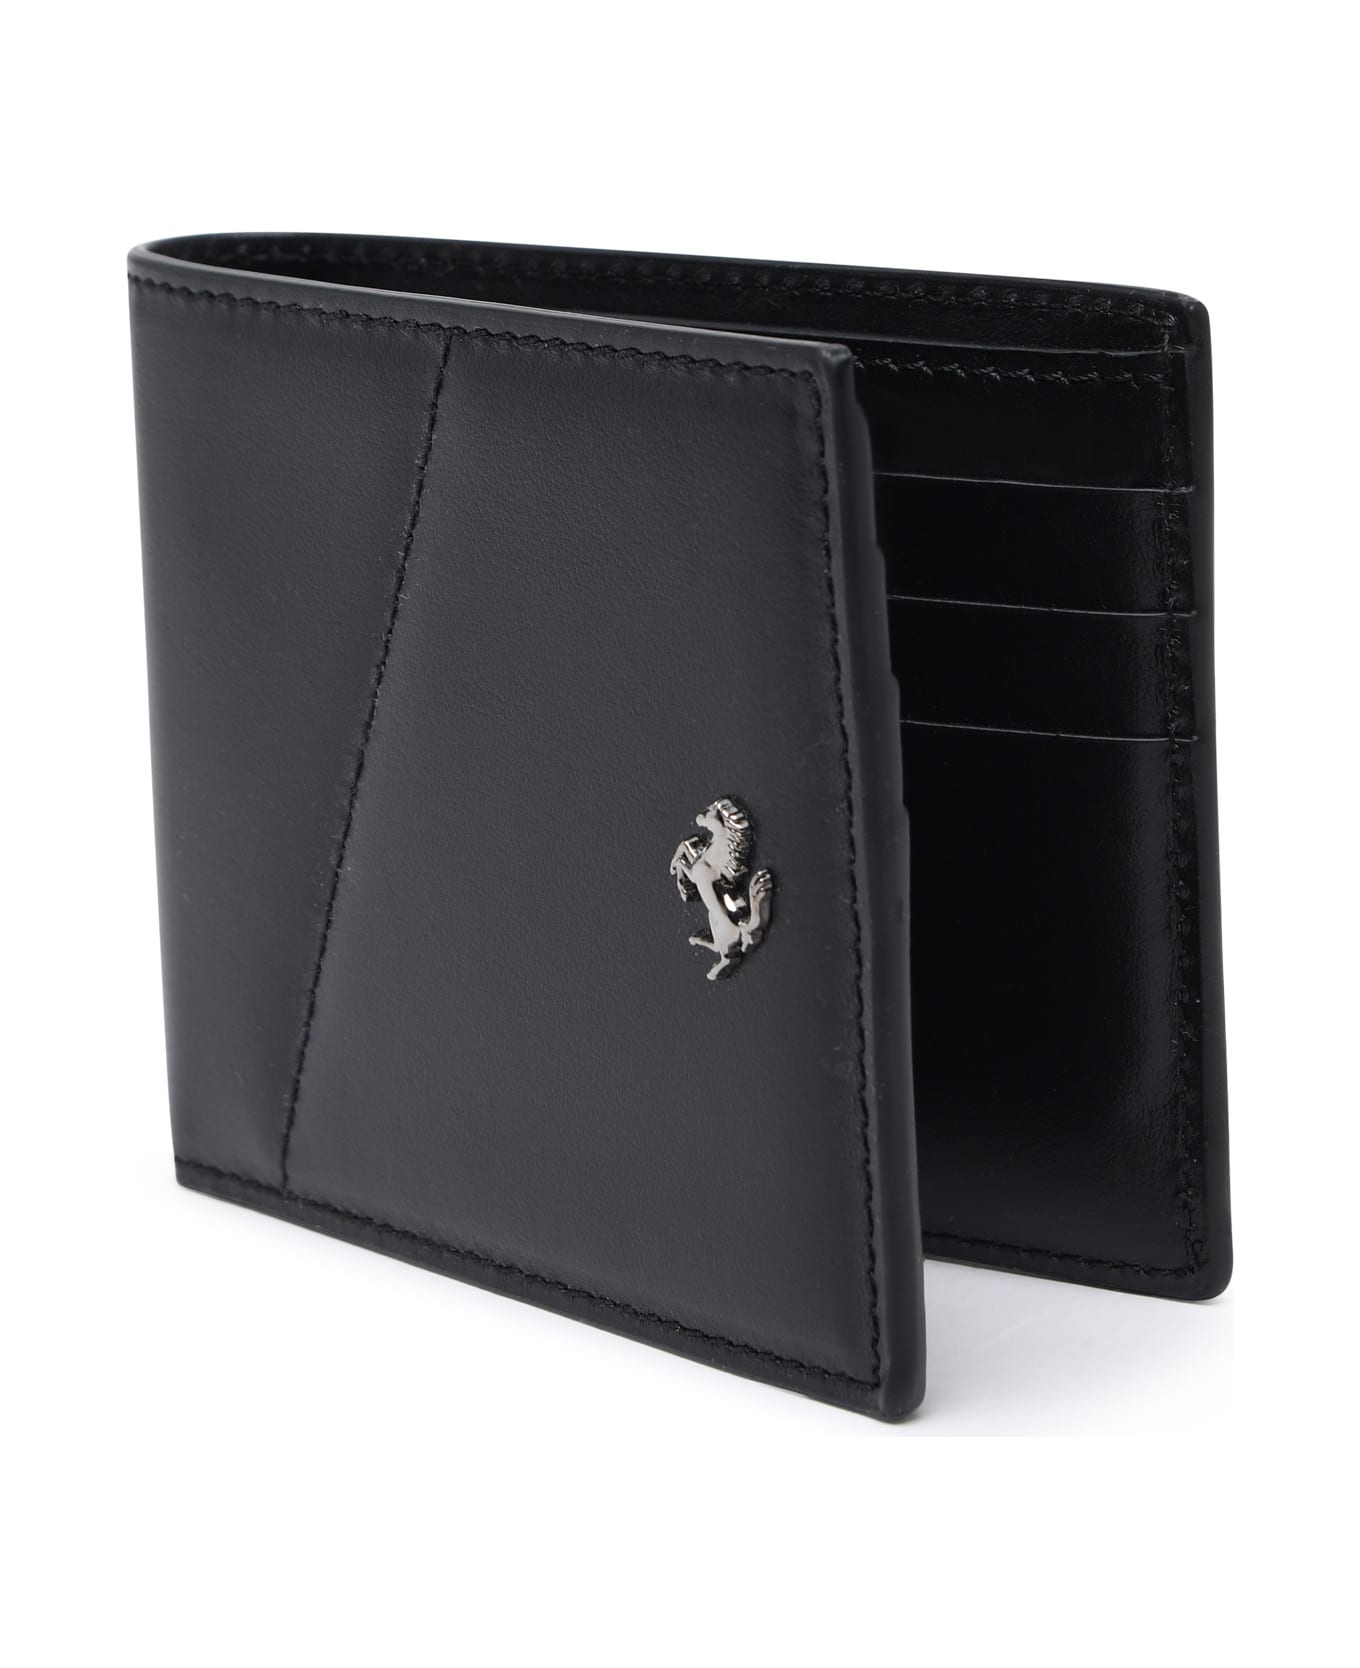 Ferrari Black Leather Wallet - Black 財布